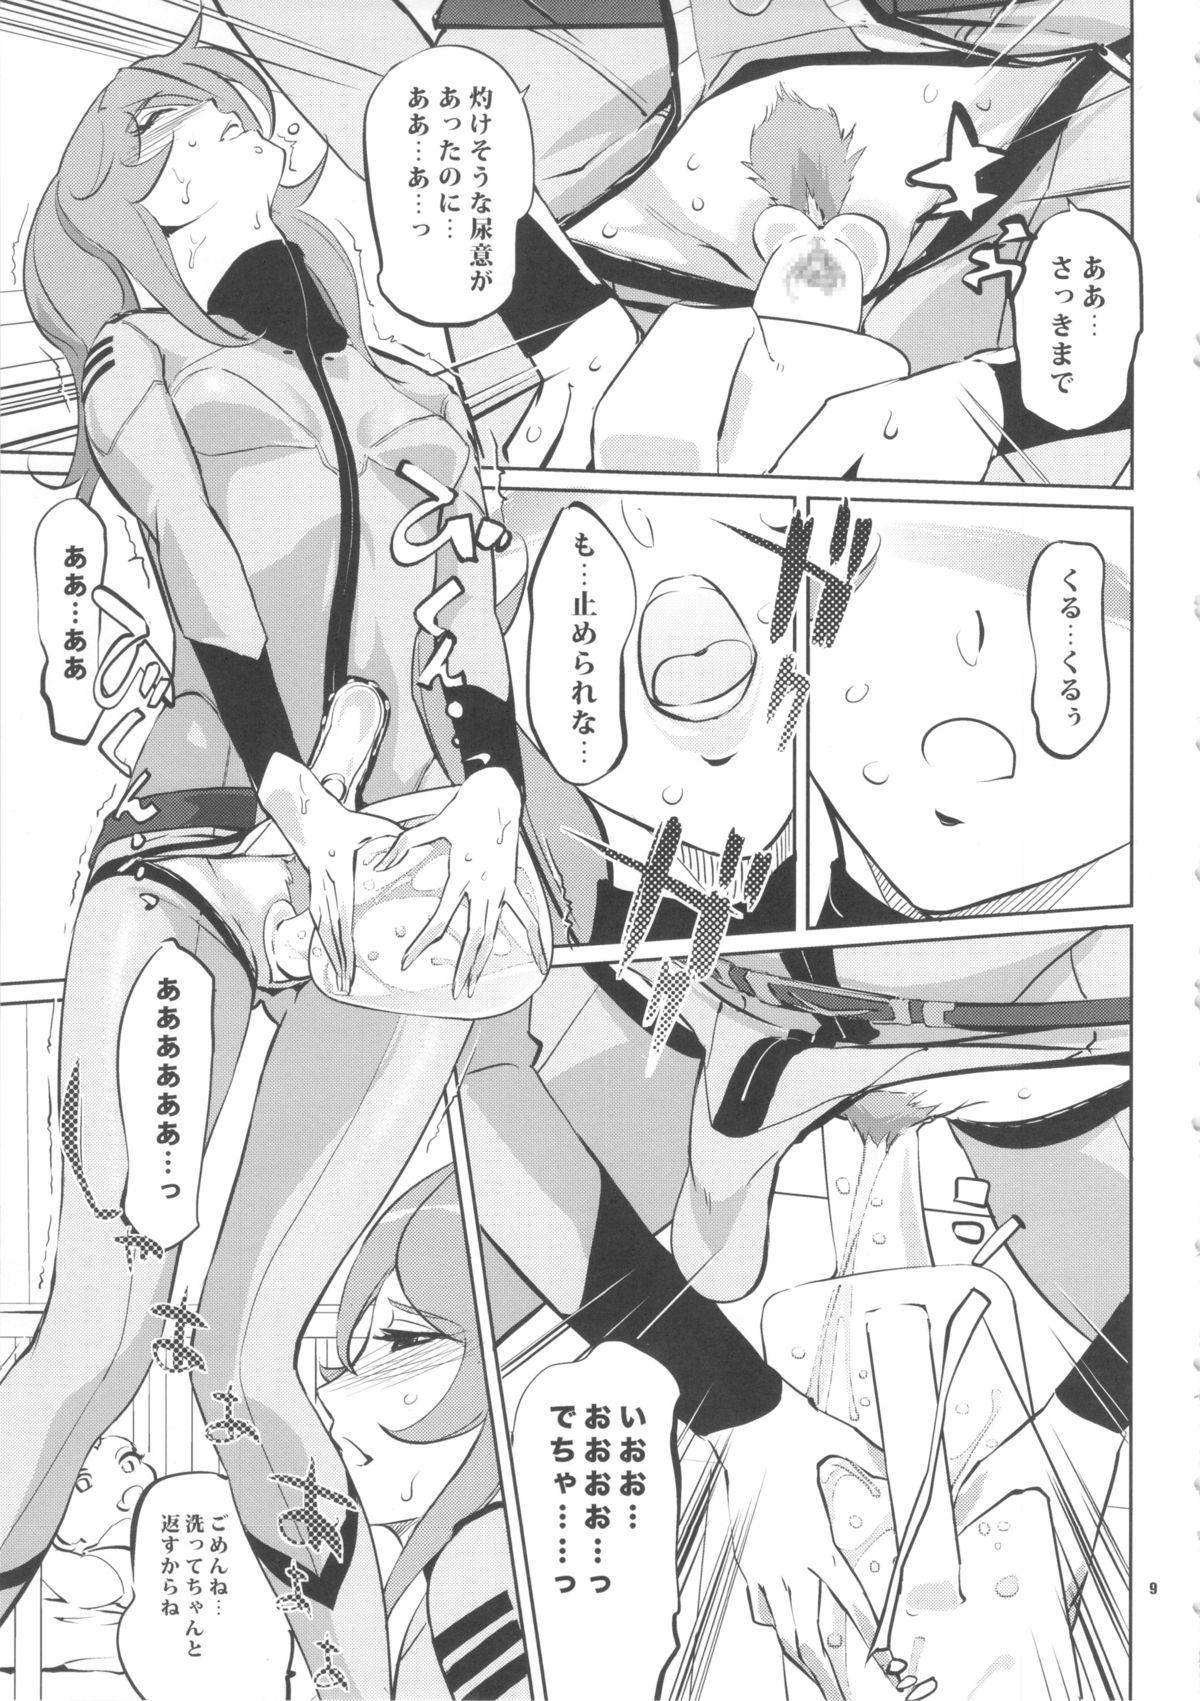 Petite Teenager YG-2199 - Space battleship yamato Chunky - Page 8